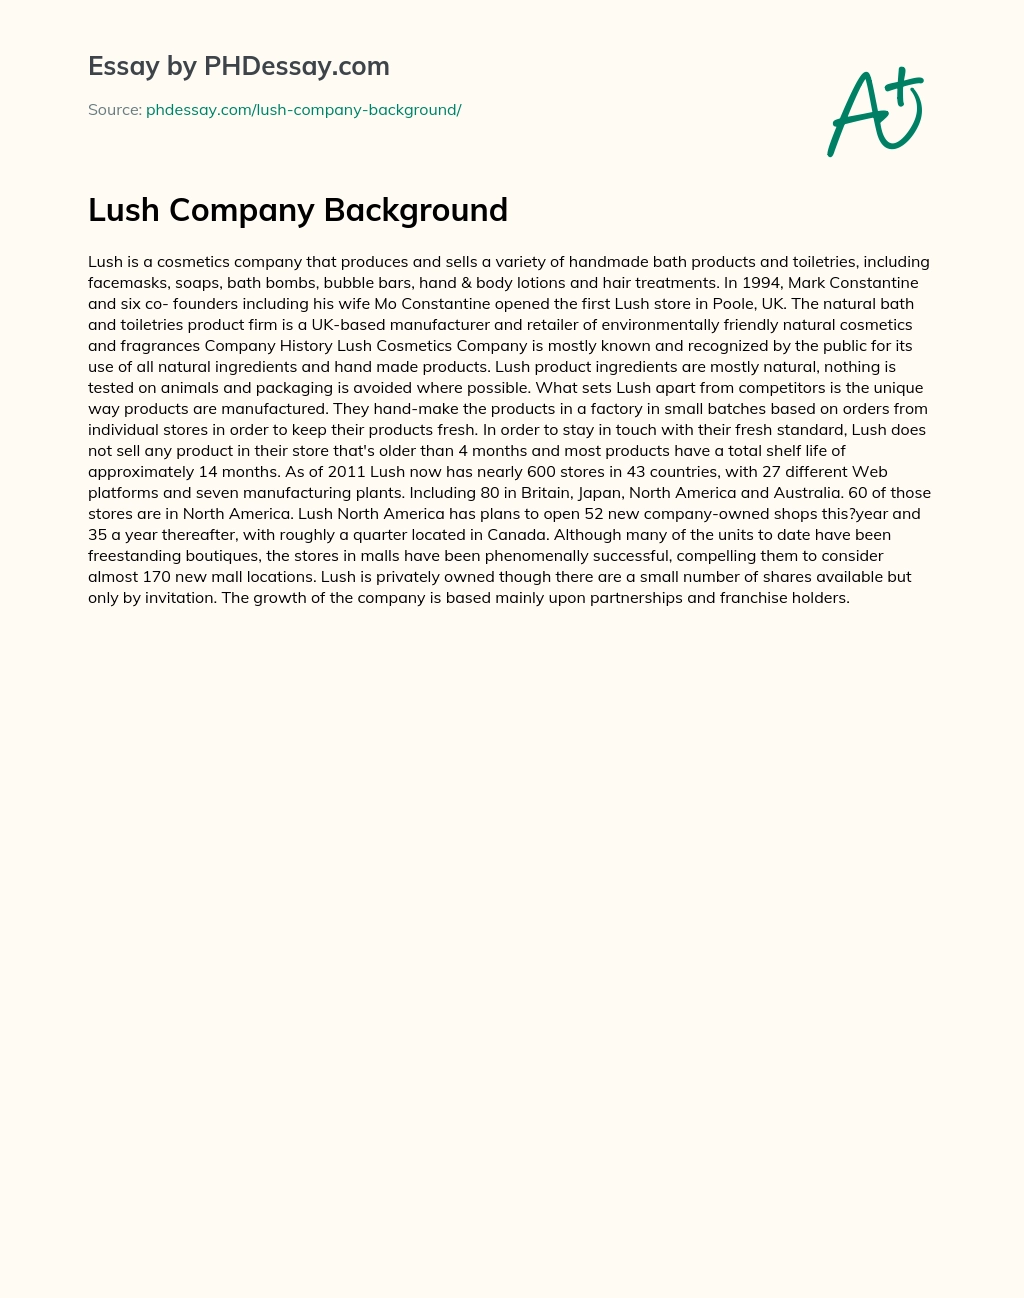 Lush Company Background essay